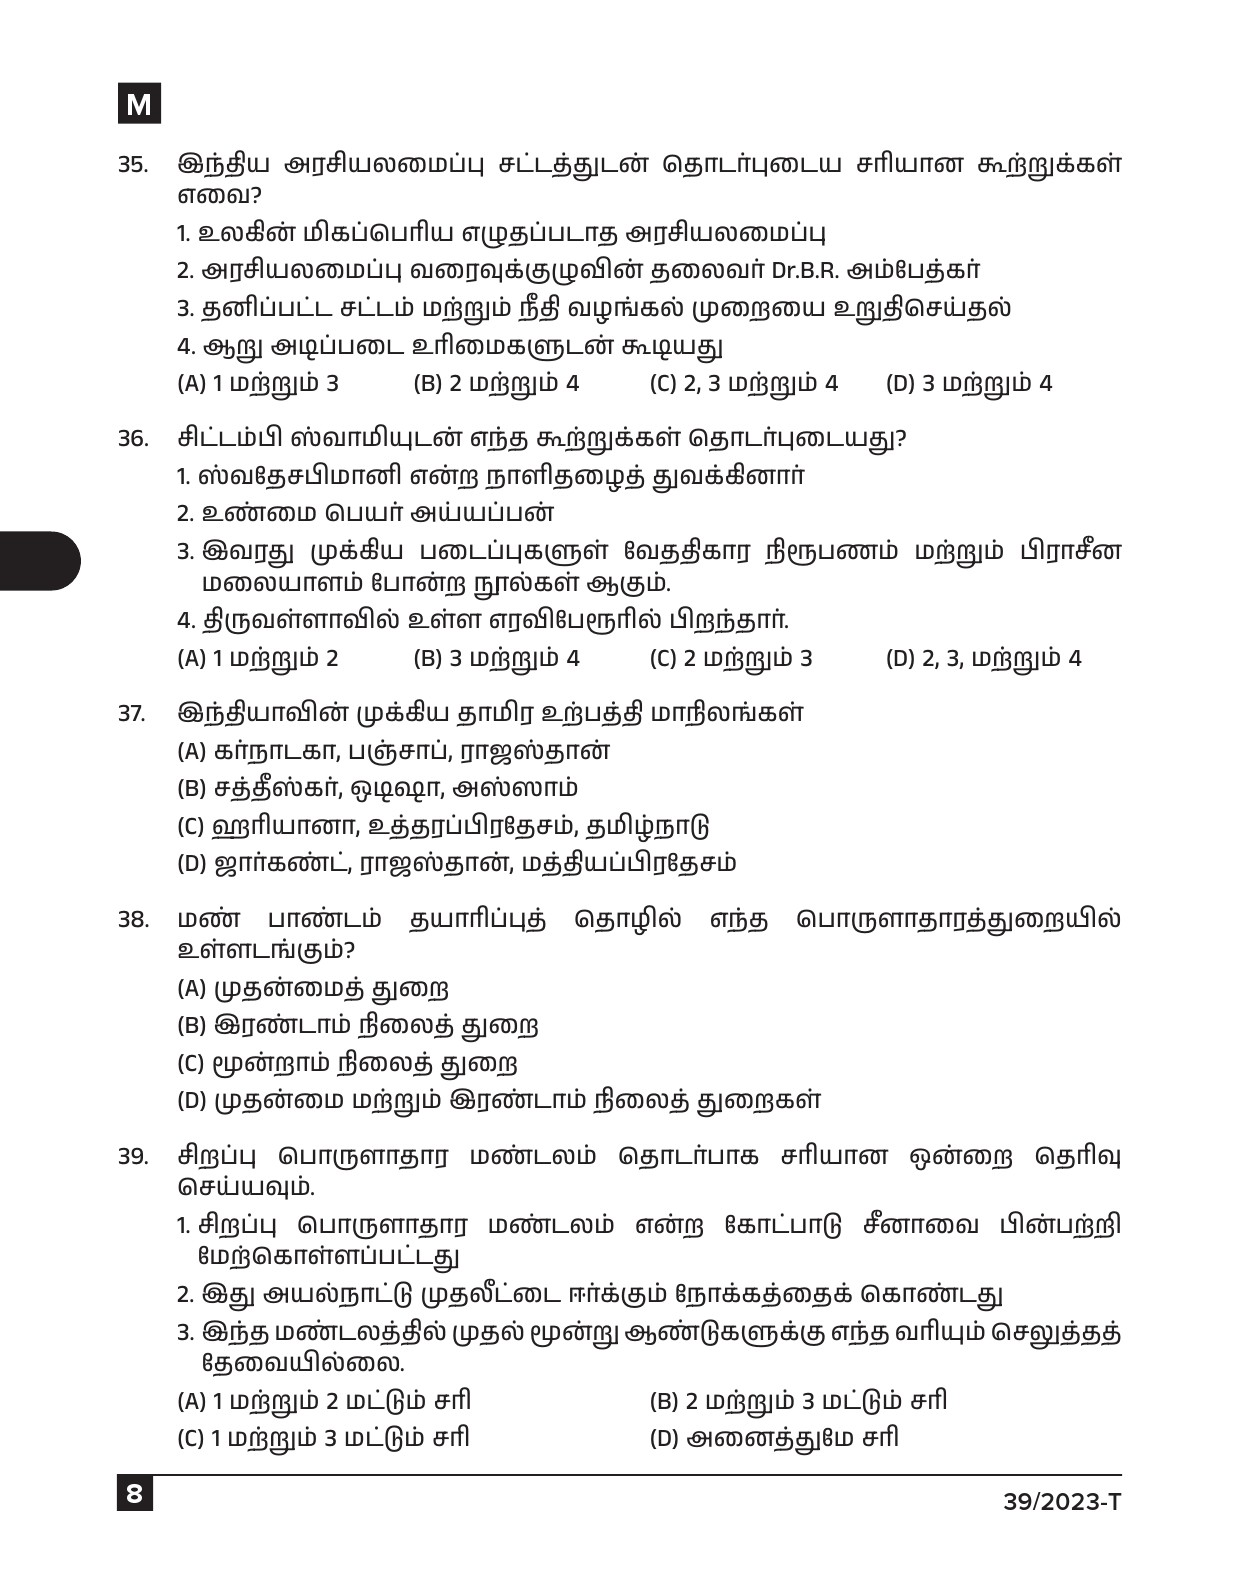 KPSC Ayah Attender Work Assistant Tamil Exam 2023 Code 0392023 T 7